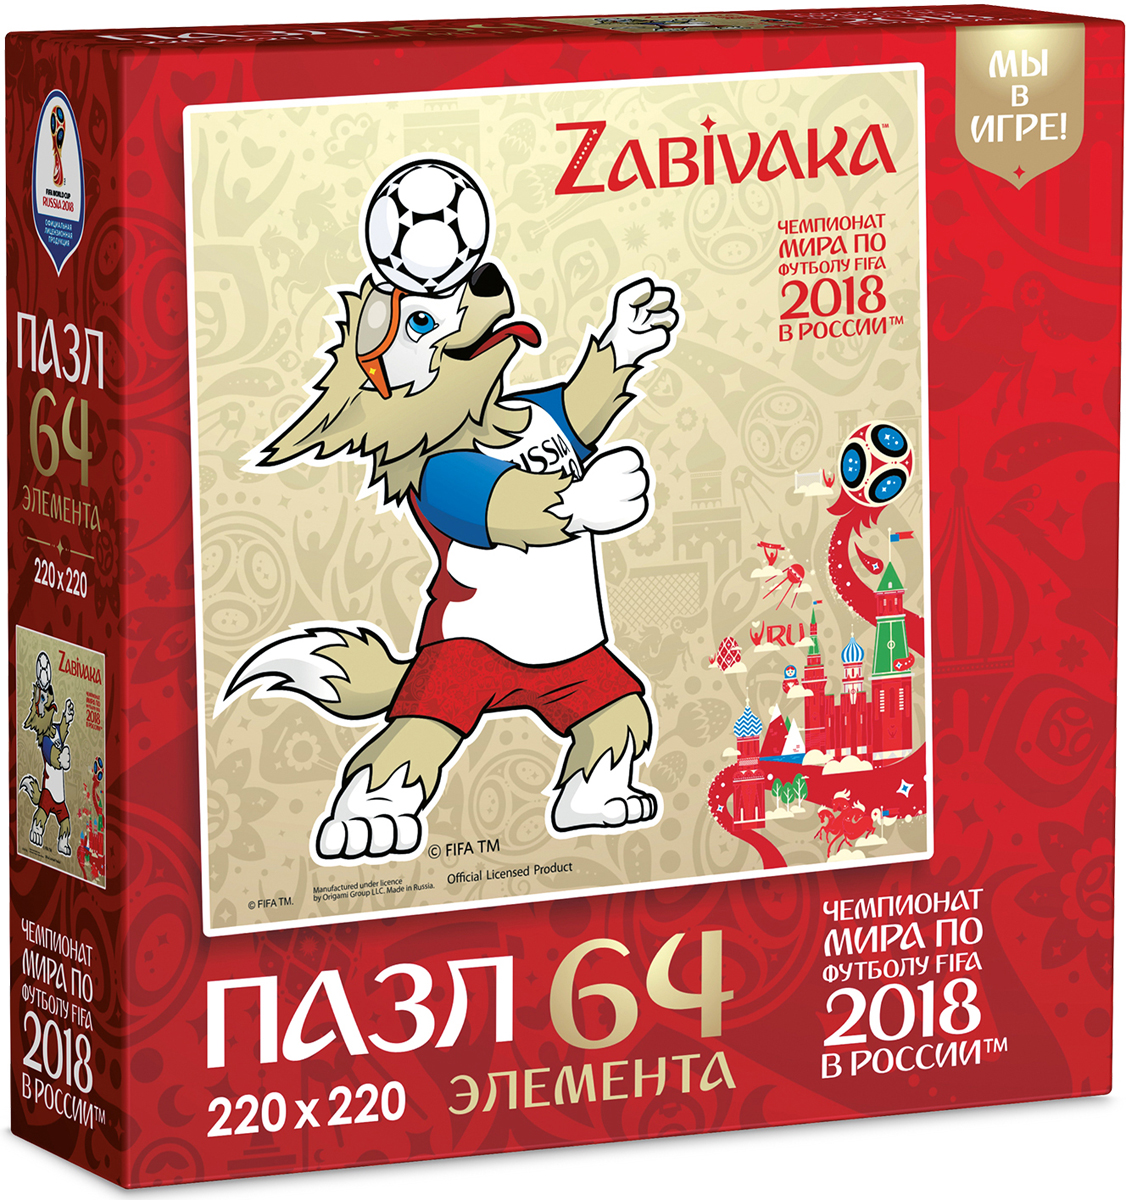 FIFA World Cup Russia 2018 Пазл Забивака Футбольный финт 03791